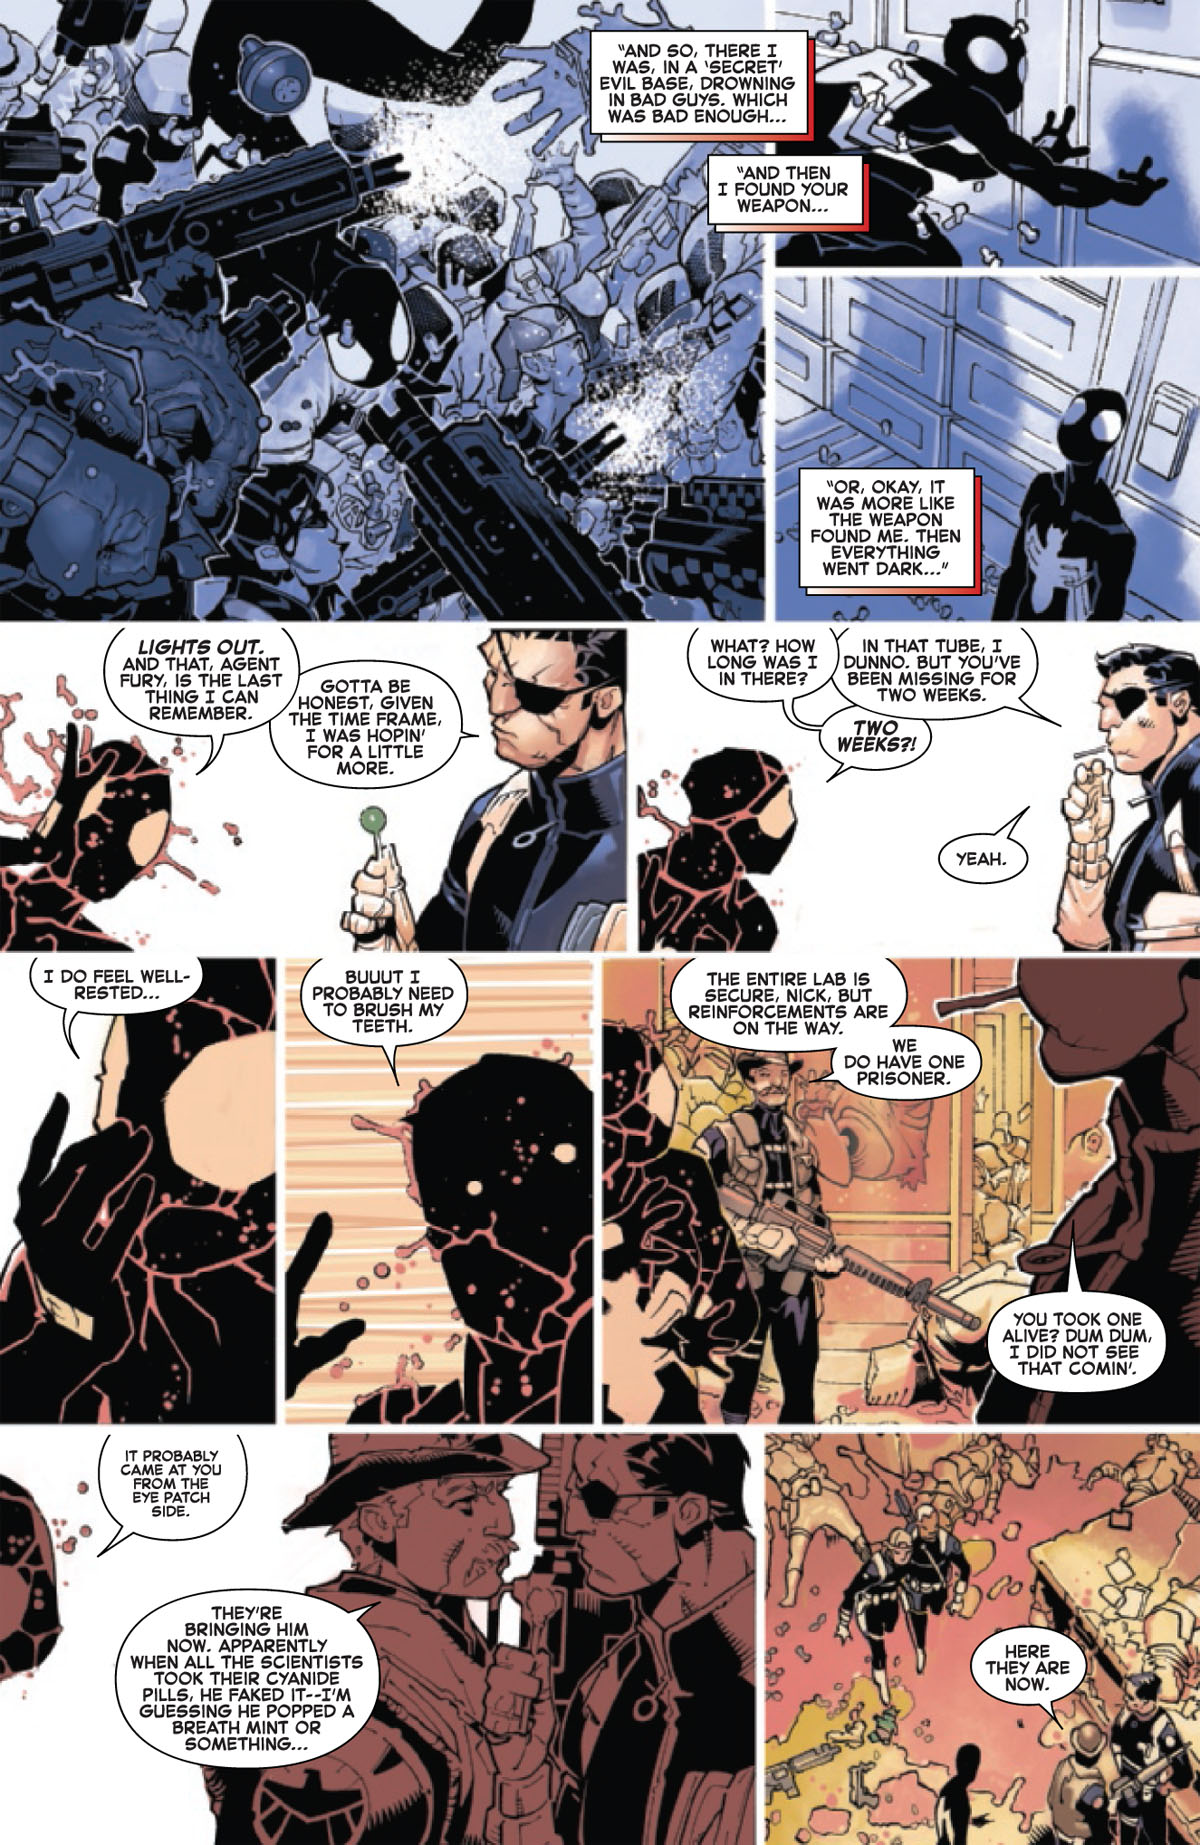 Amazing Spider-Man: Full Circle #1 page 4